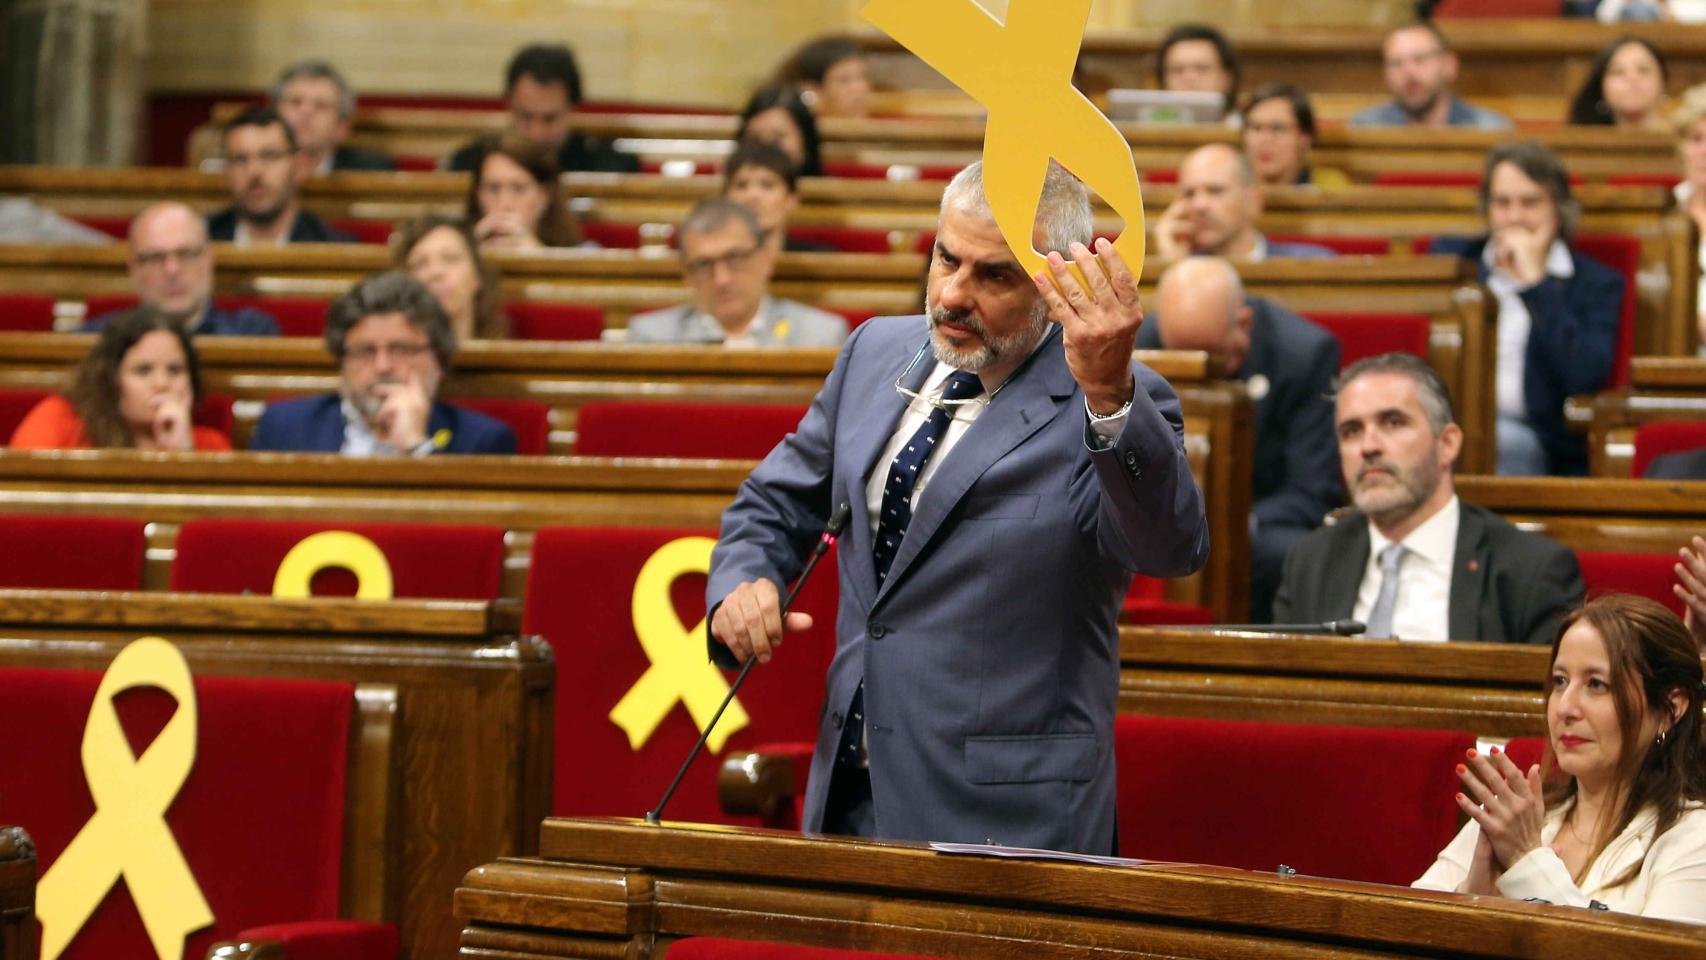 Carrizosa recibió amenazas en su casa tras retirar el lazo amarillo del Parlament